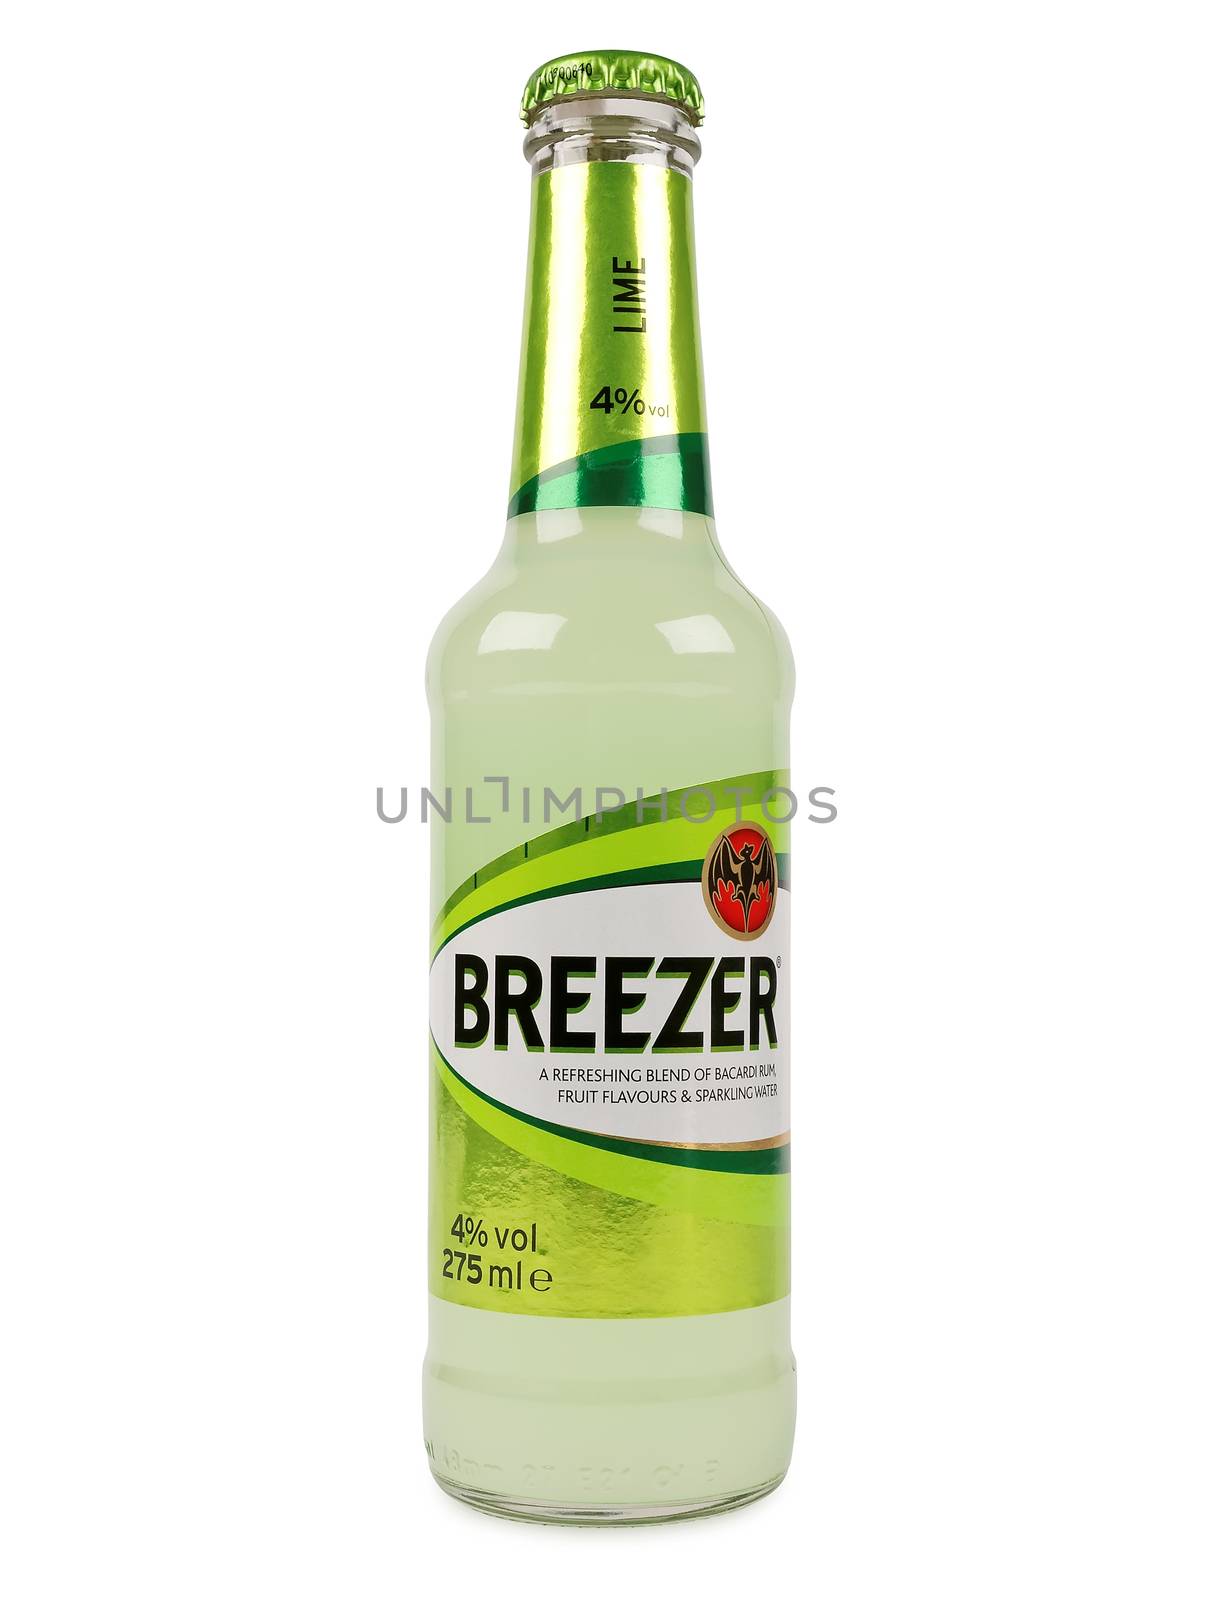 PULA, CROATIA - JANUARY 23, 2016: Bacardi Breezer Lime. Breezer a refreshing blend of alcohol, Bacardi rum, fruit flavours & sparkling water alc.4% 275ml. 